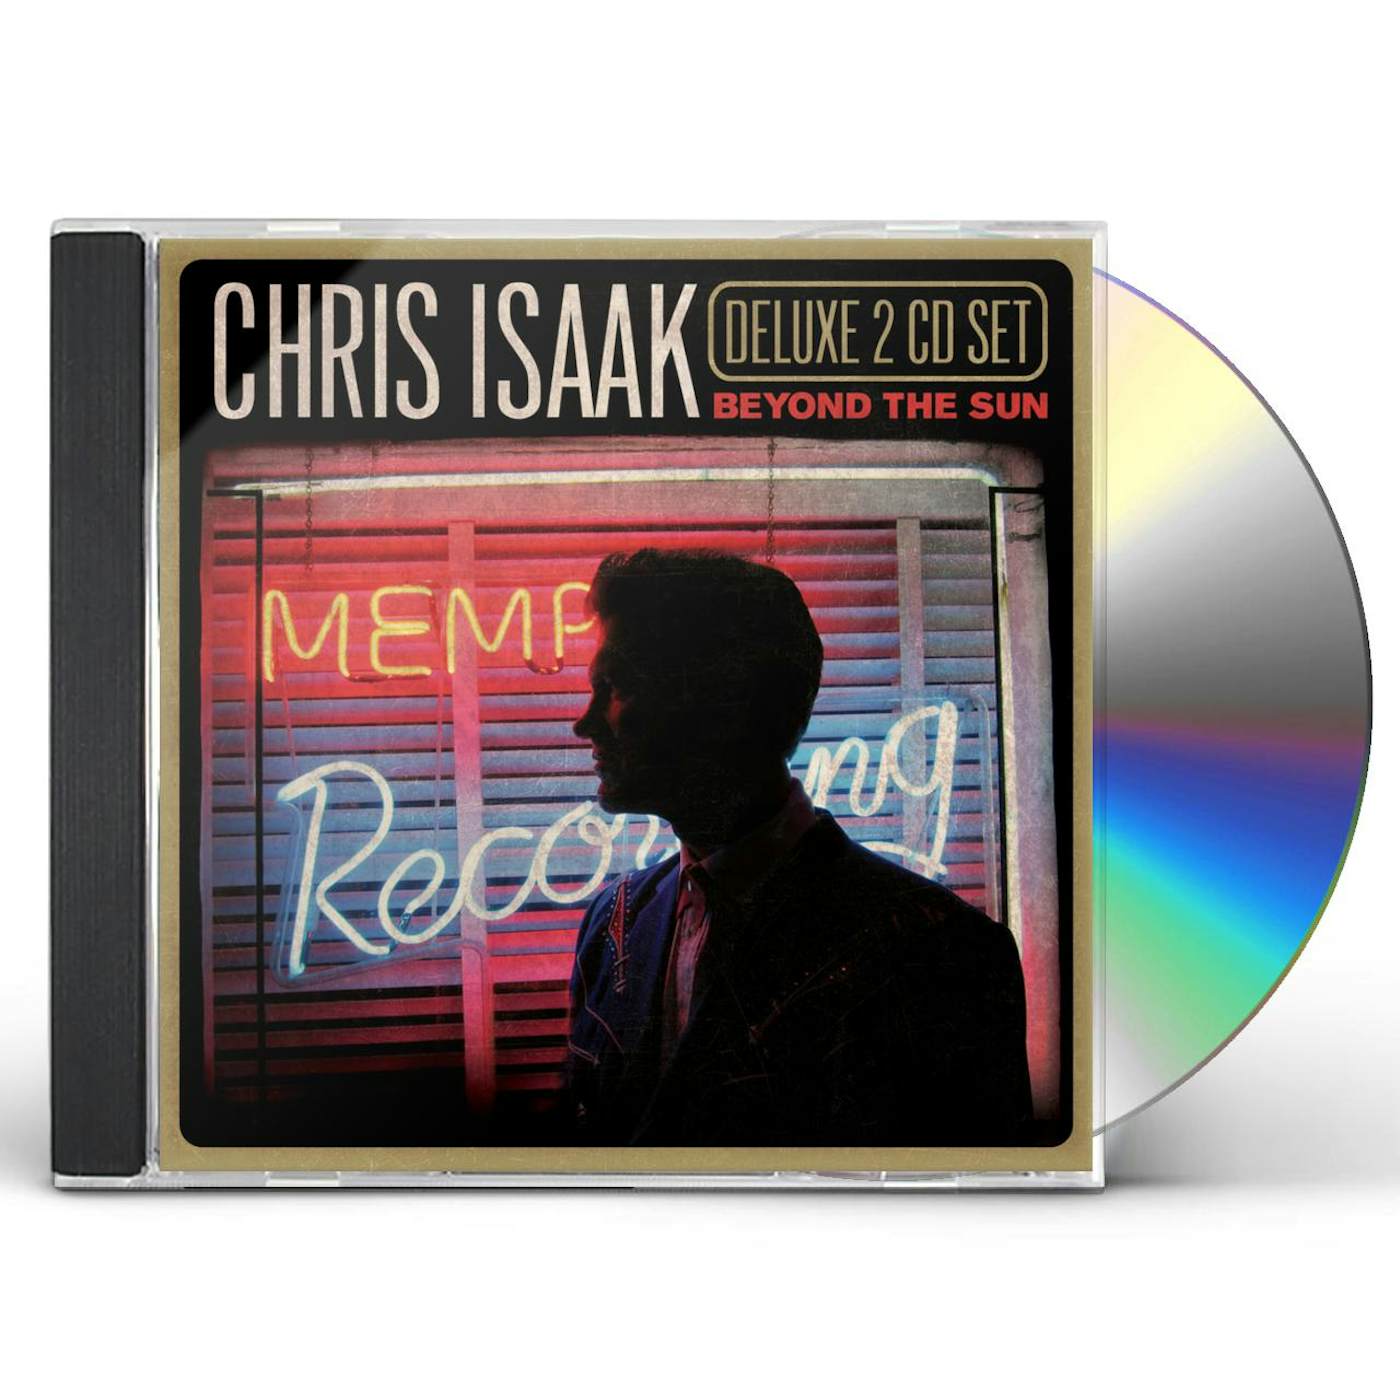 Chris Isaak BEYOND THE SUN CD